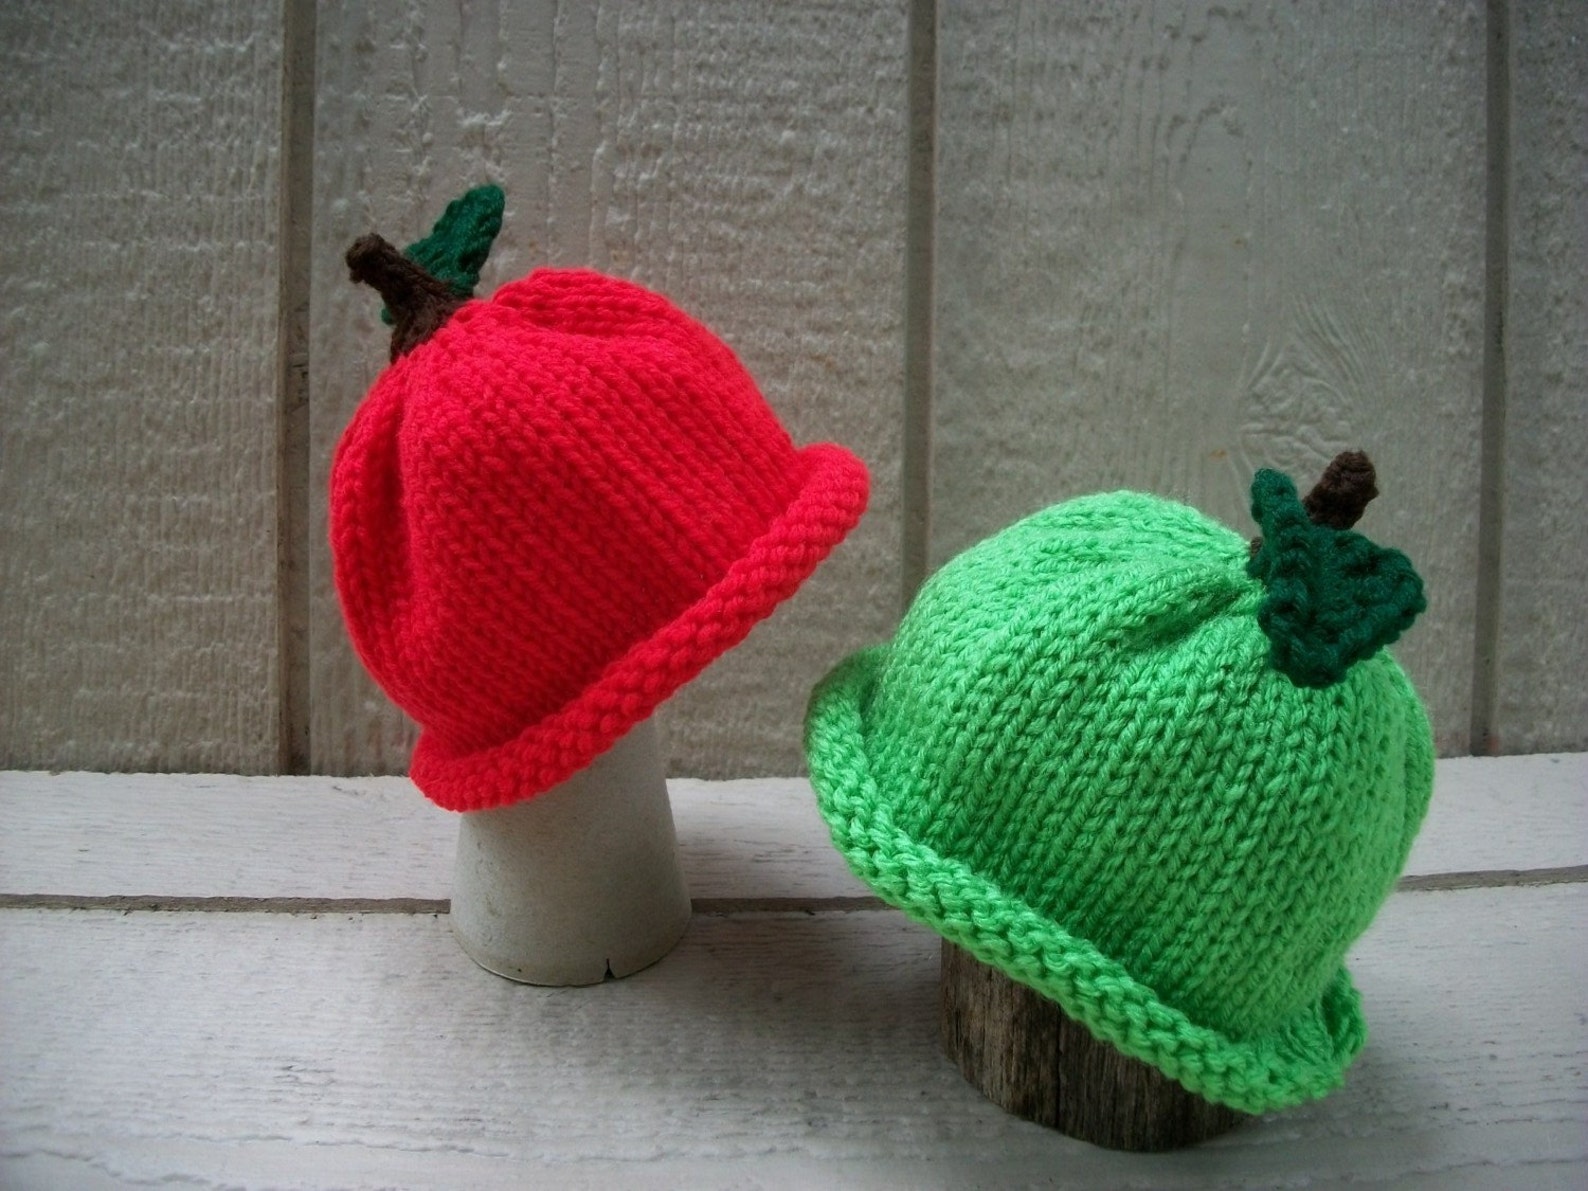 Apple Beanie Hats NewBorn photo props 2 Hand Knit Hats twins | Etsy